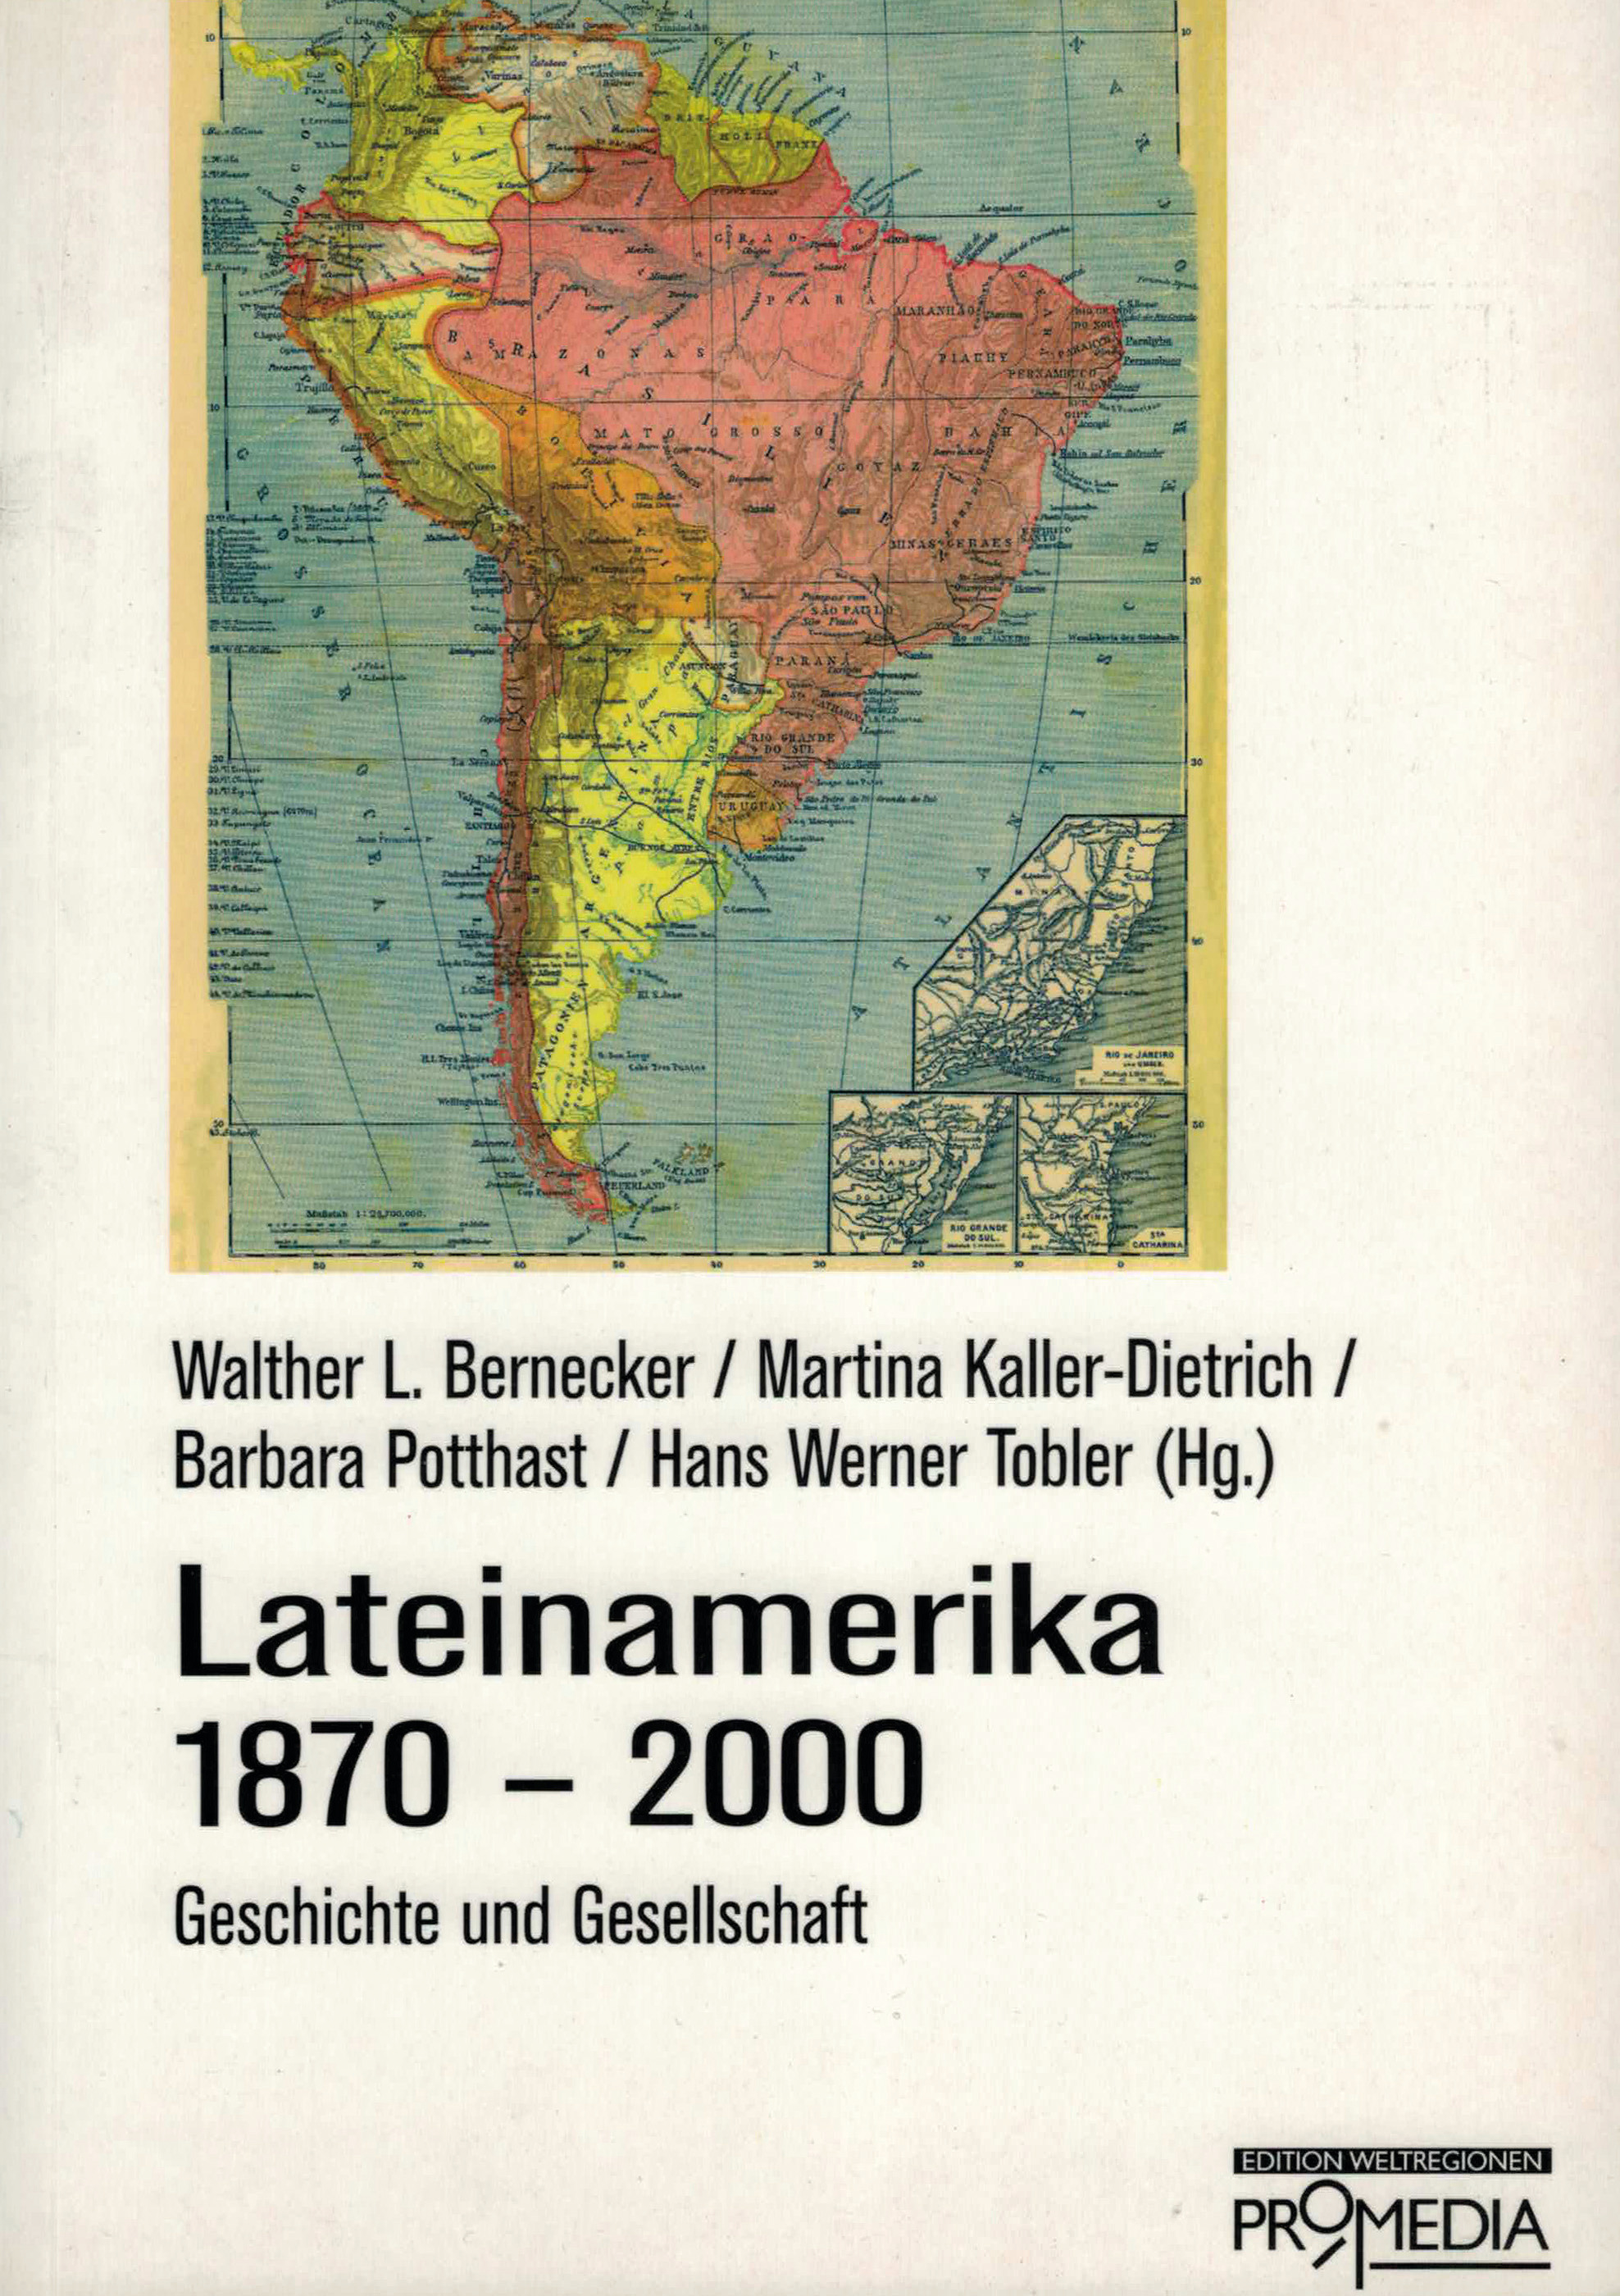 [Cover] Lateinamerika 1870-2000